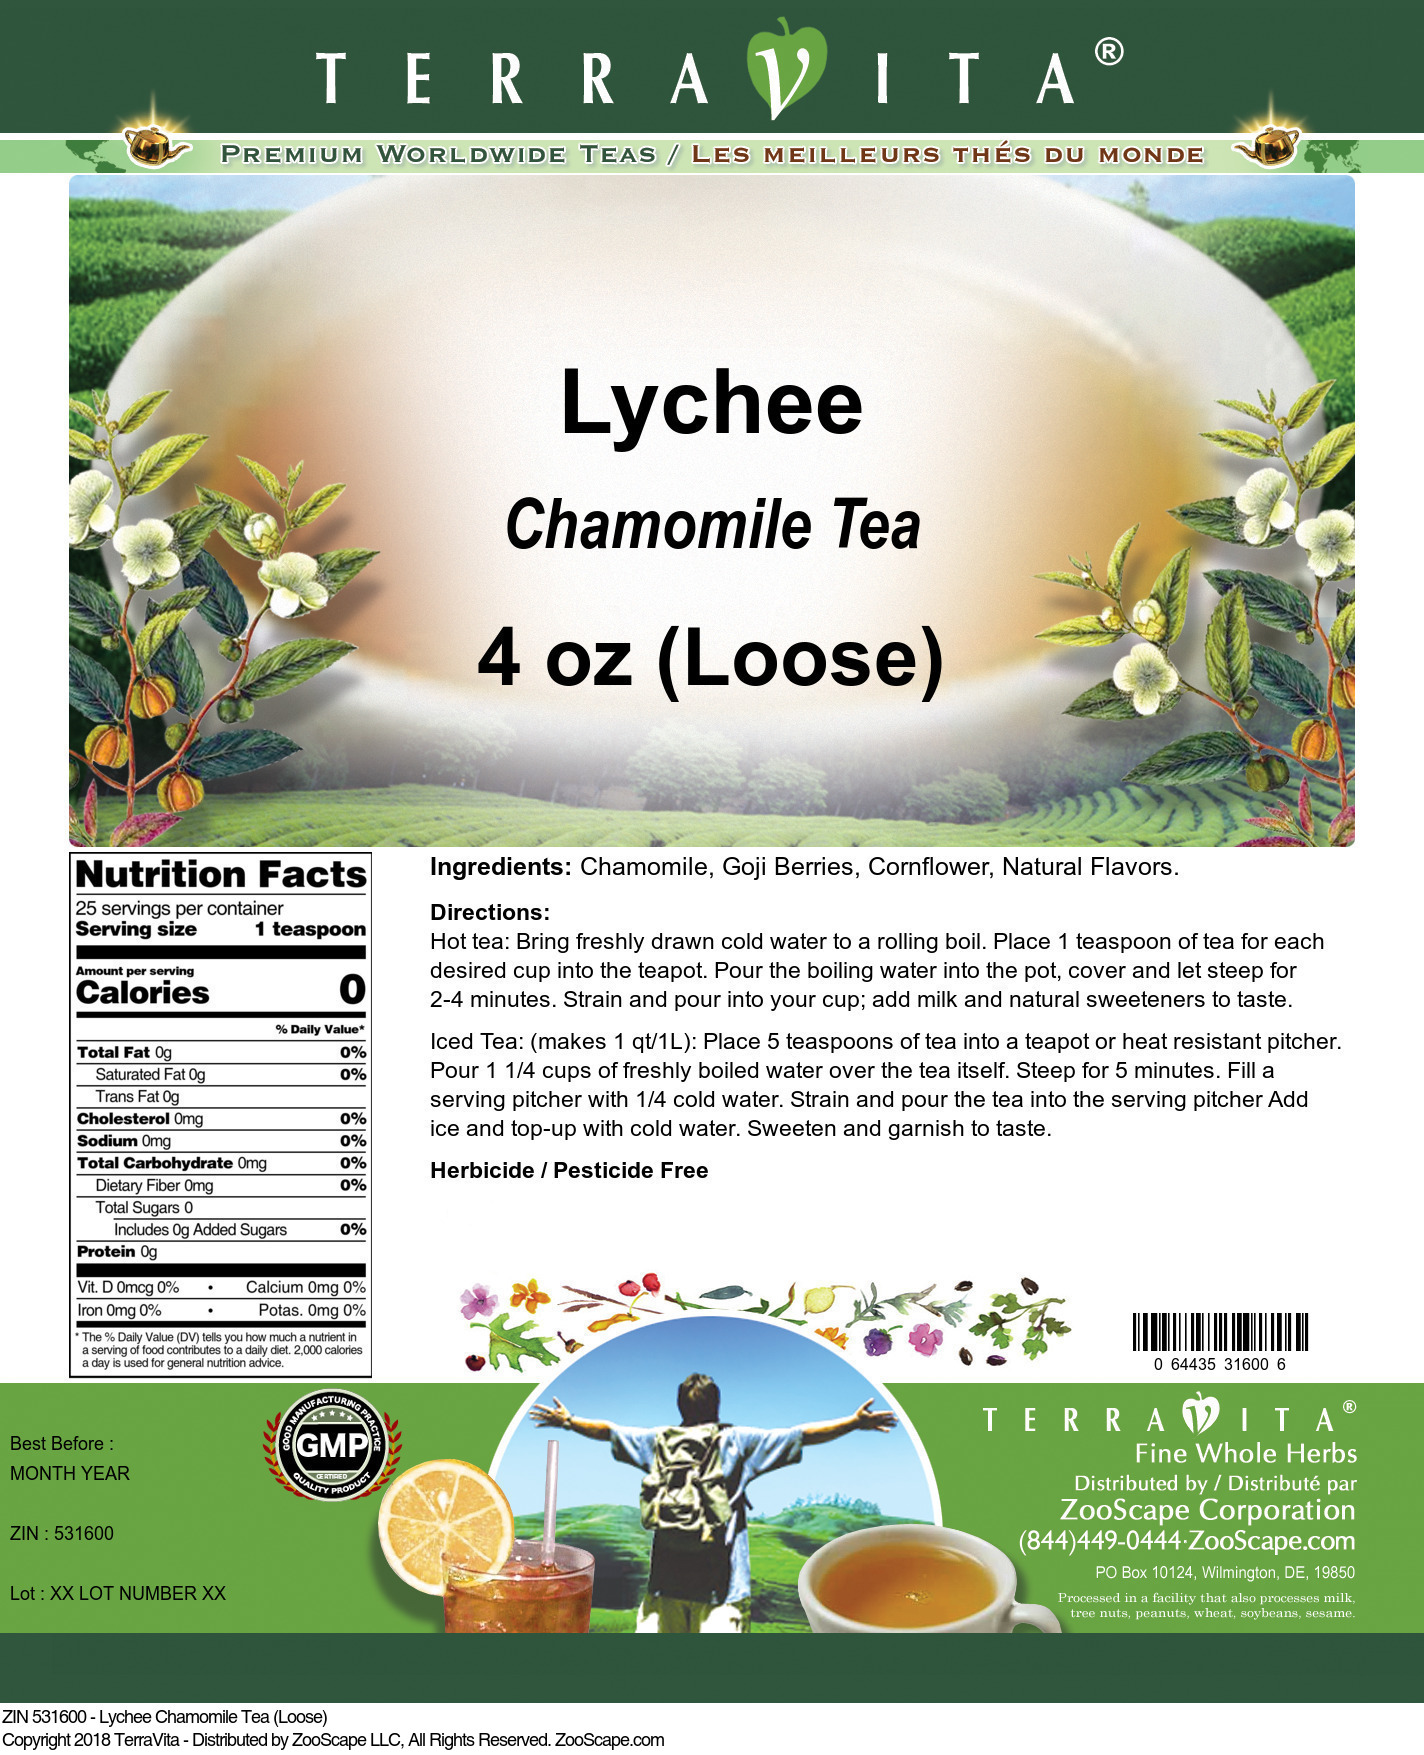 Lychee Chamomile Tea (Loose) - Label